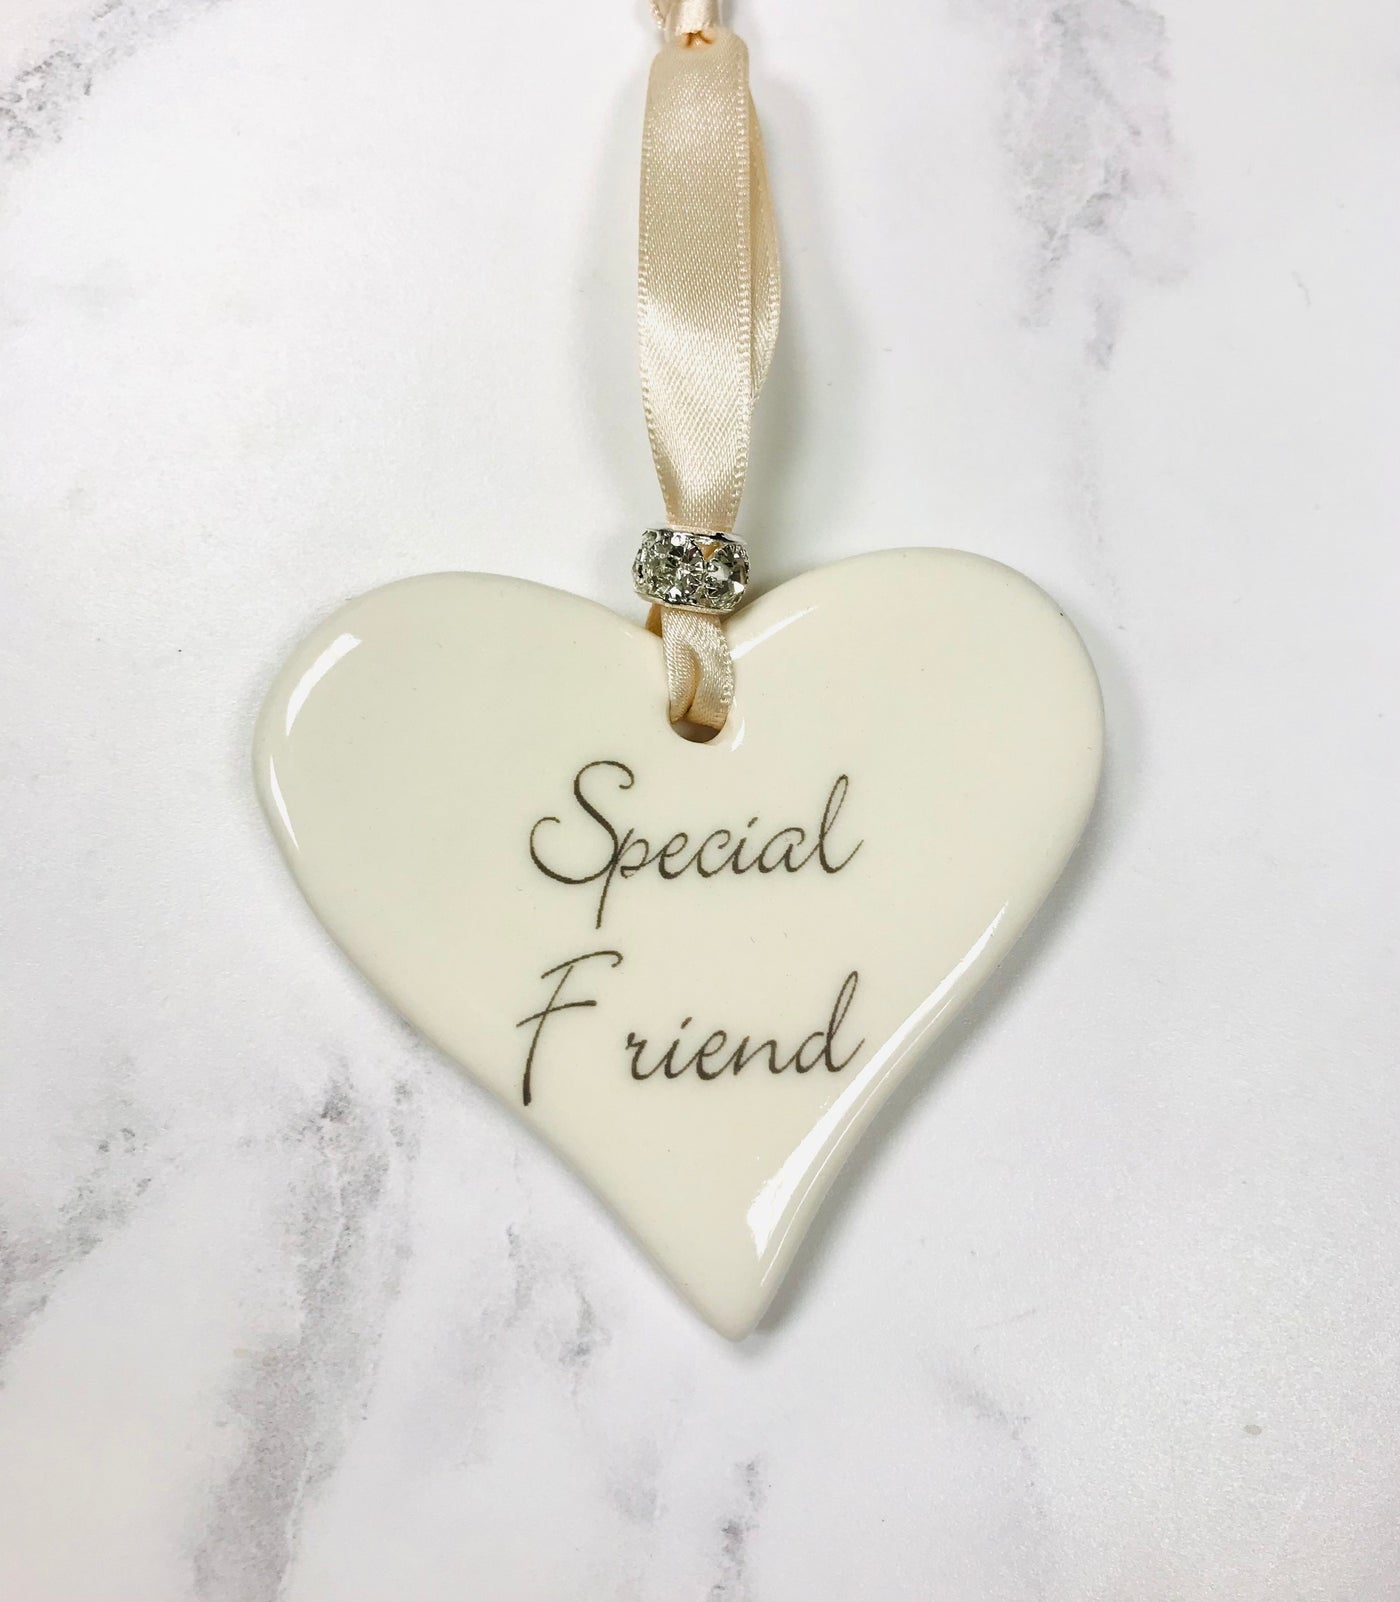 Dimbleby Ceramics Sentiment Hanging Heart - Special Friend